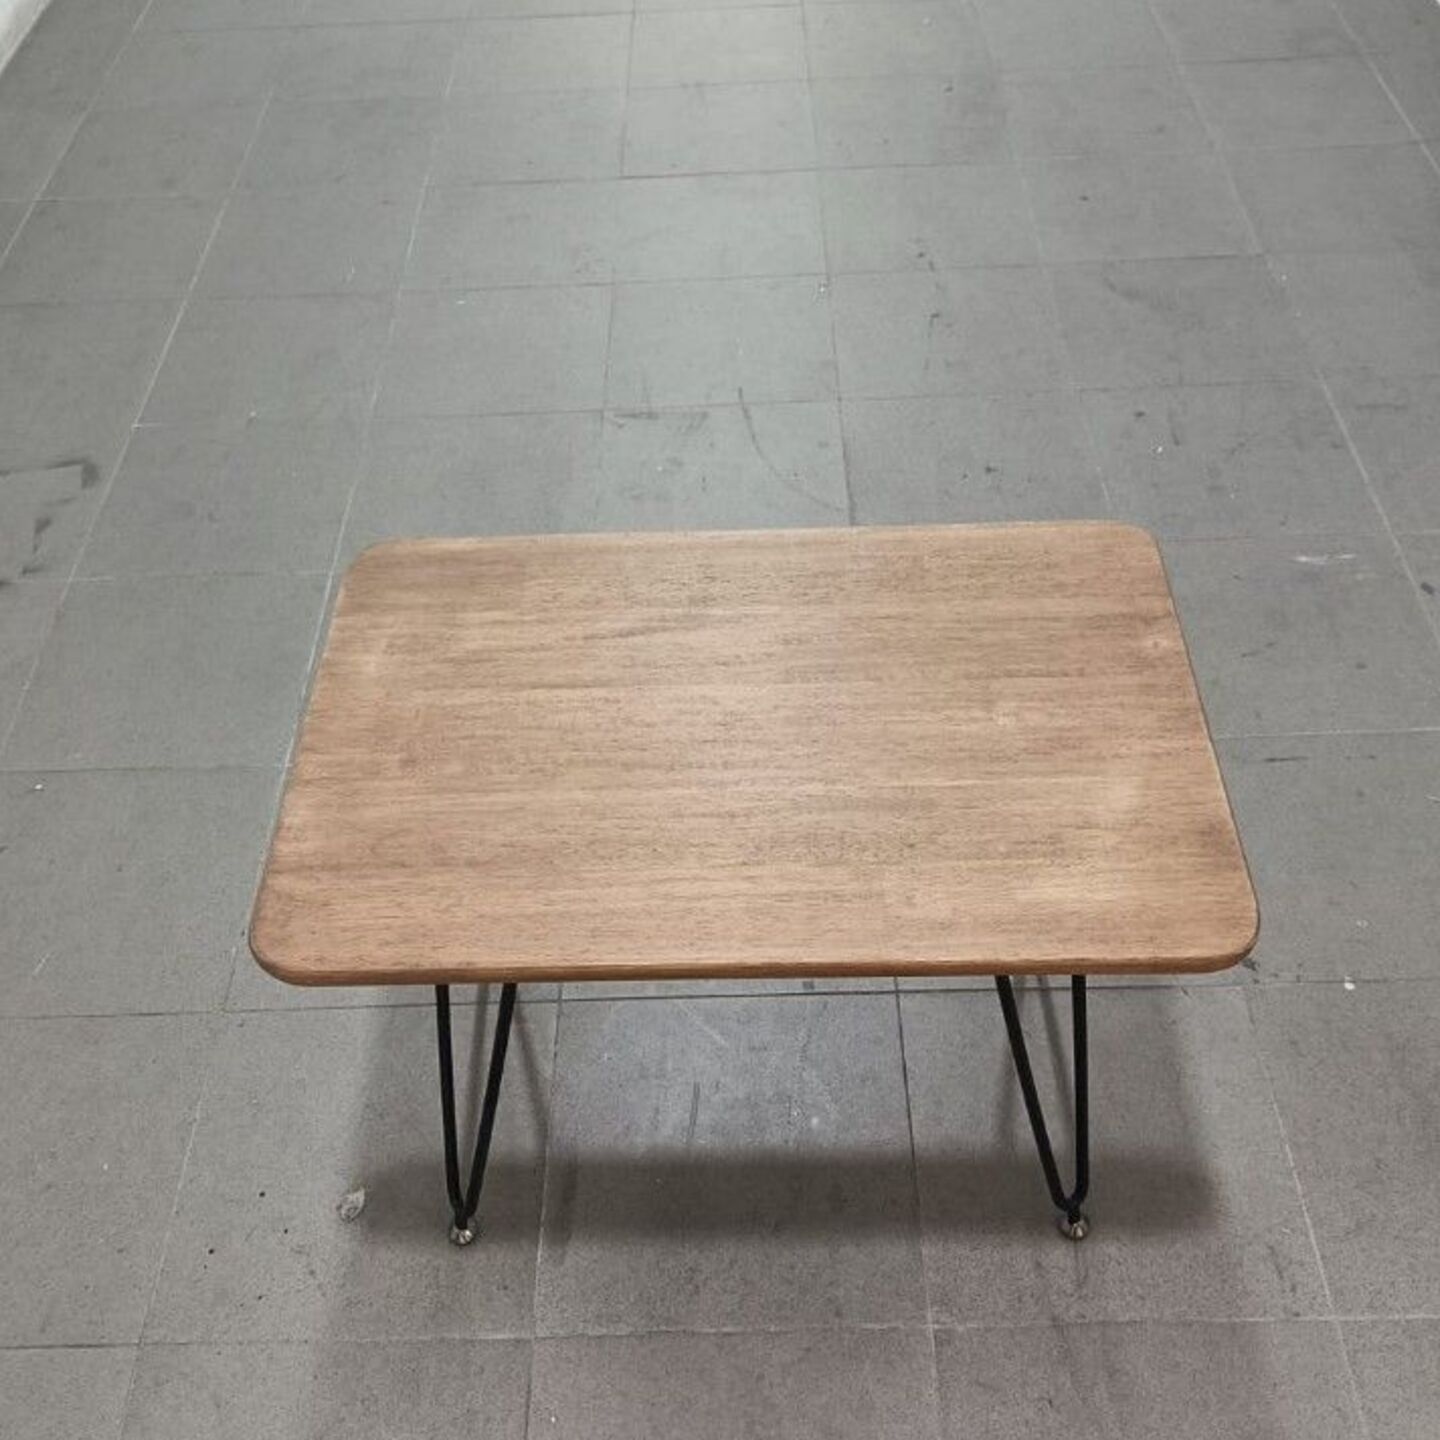 DREA Rustic Wooden Side Table